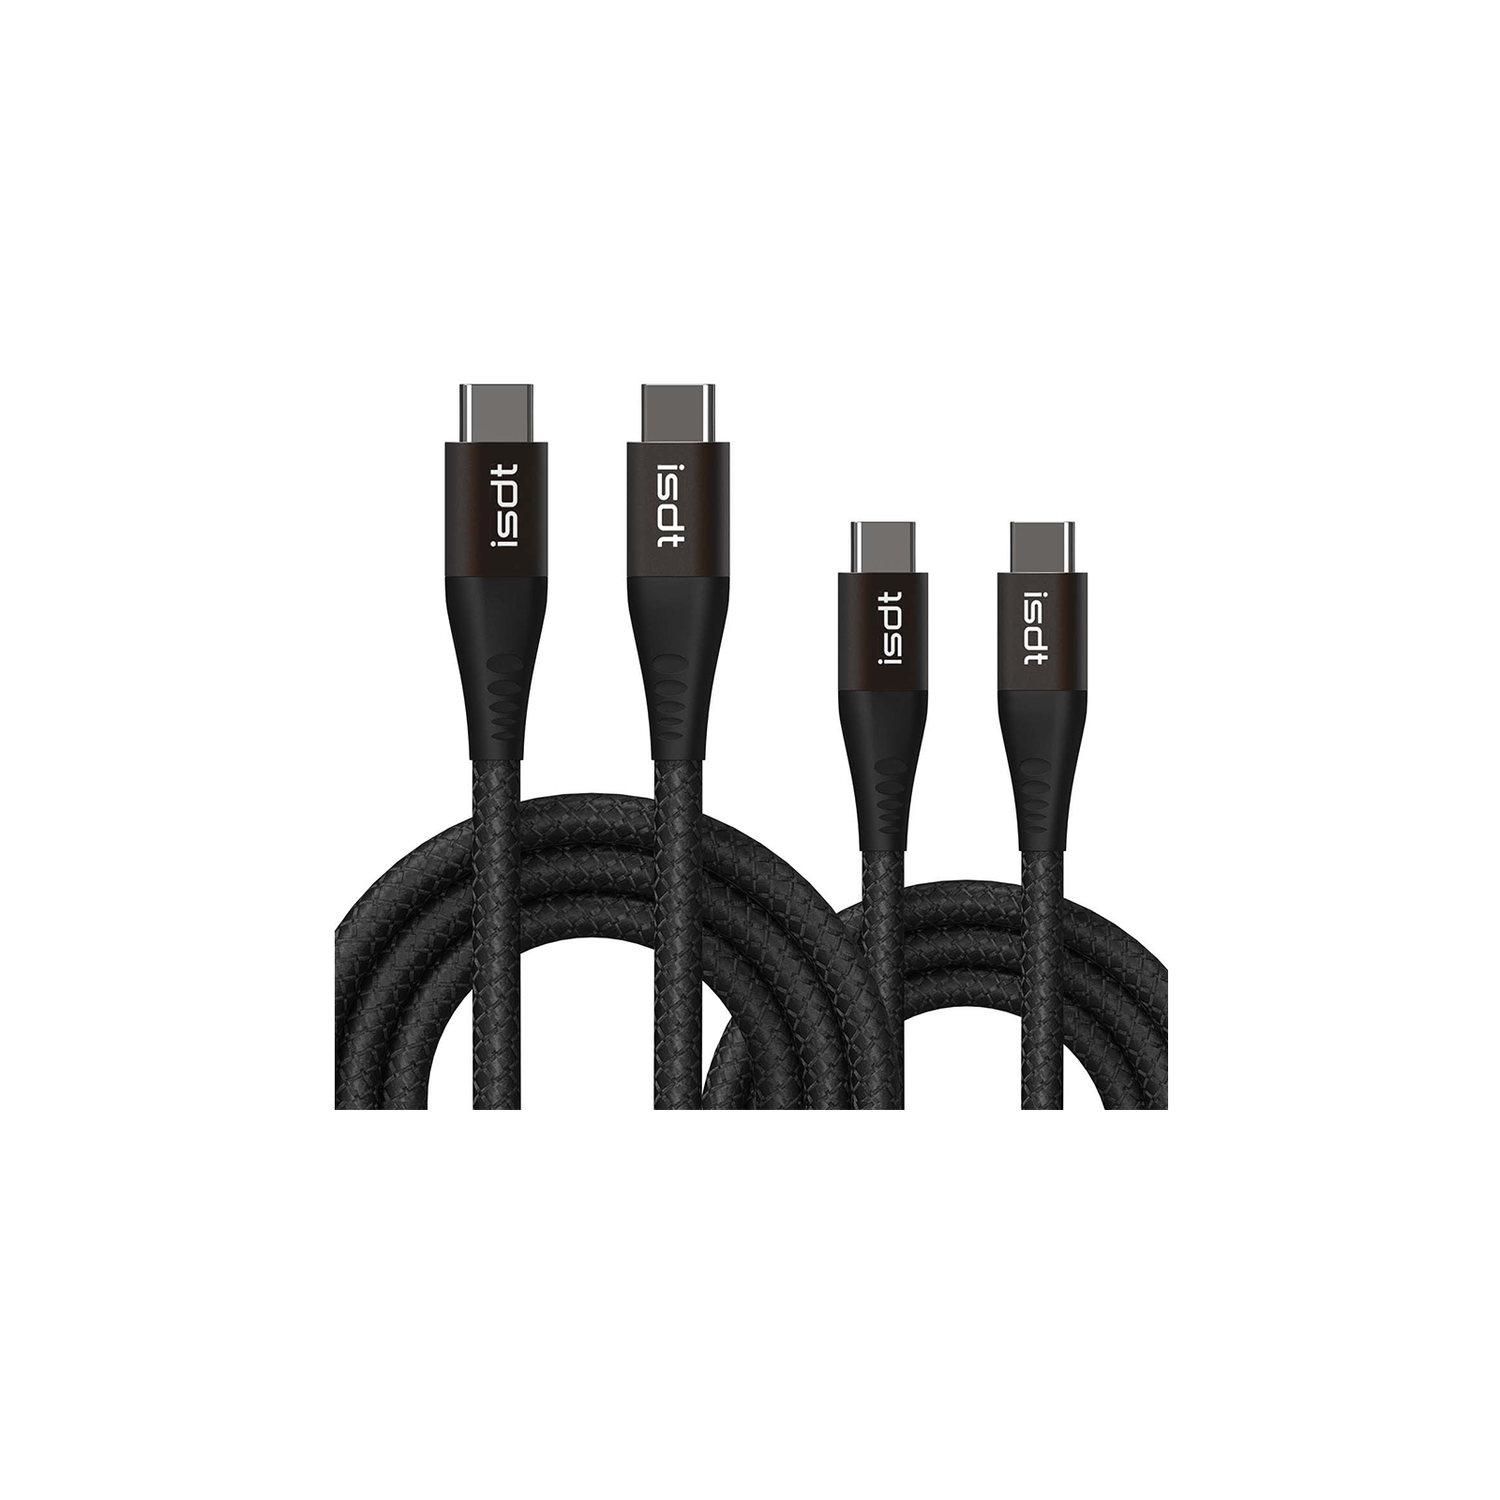 Cable de cargador USB C, cable USB C de carga rápida de 100W/240W, 1.2M/2M USB C a USB C Cable para teléfono, plomo de datos USB-C compatible con MacBook Pro/Samsung/Switch/PS5/Xiaomi/Huawei etc.